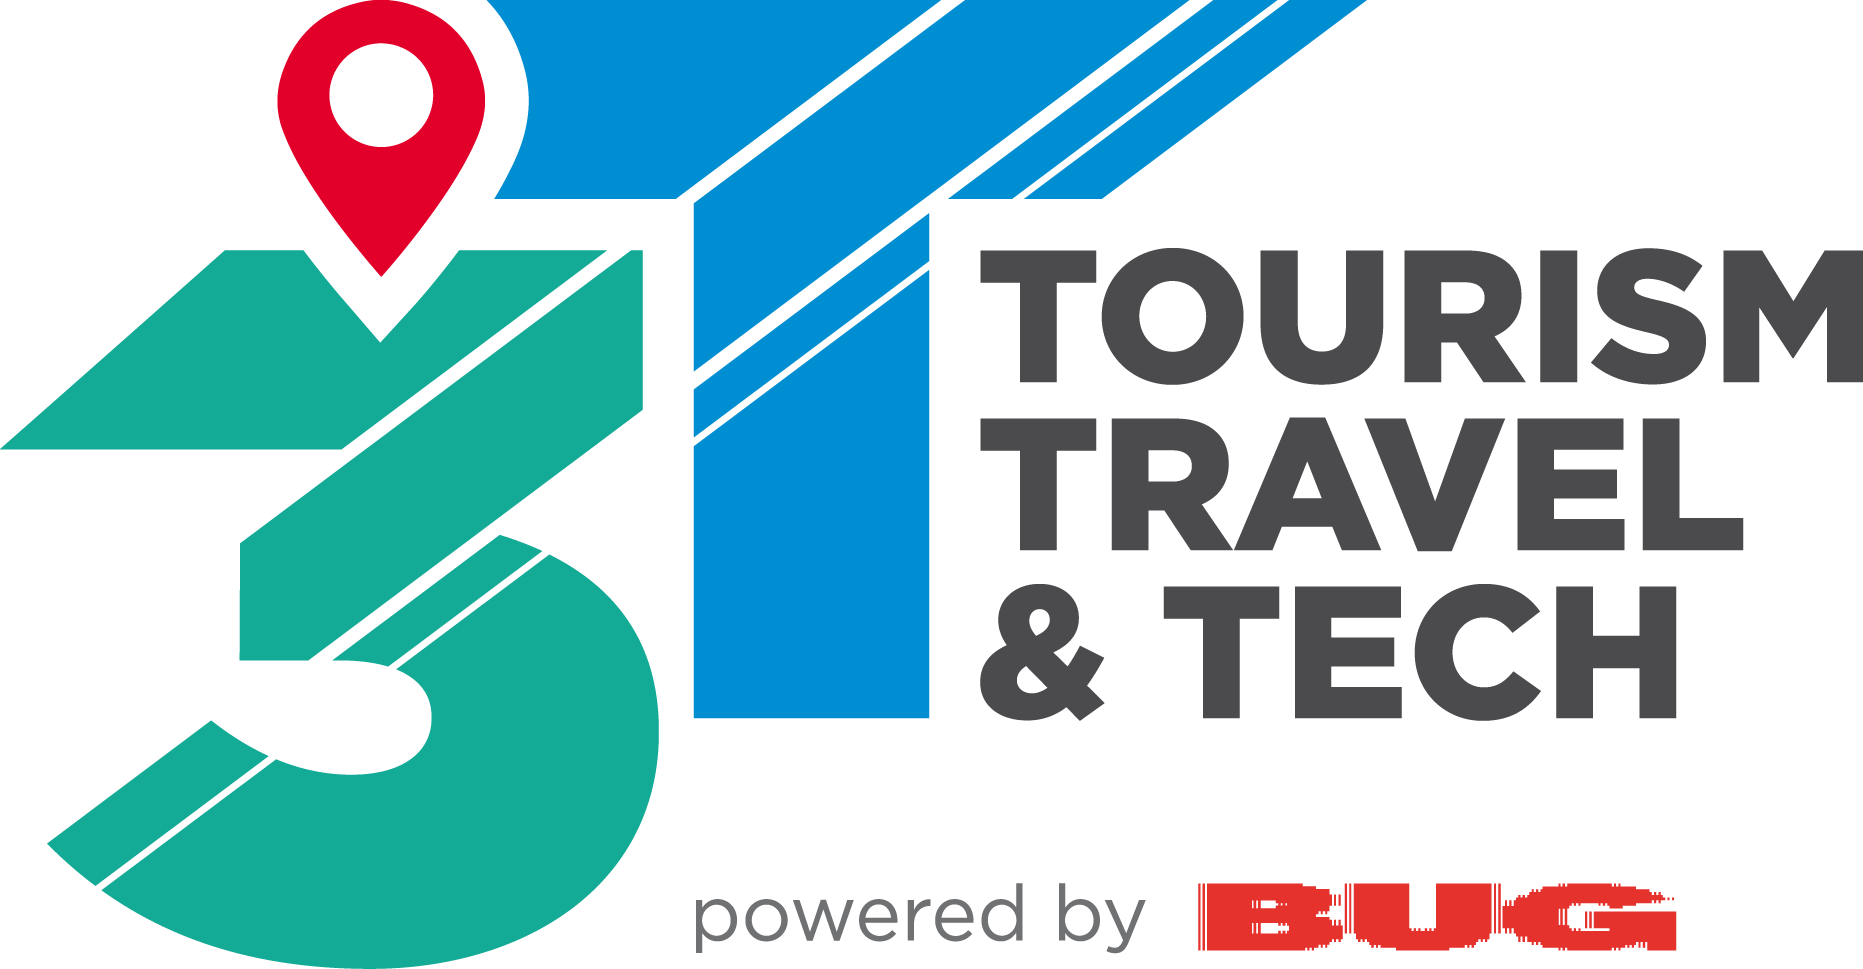 3T - Tourism, Travel & Tech 2022